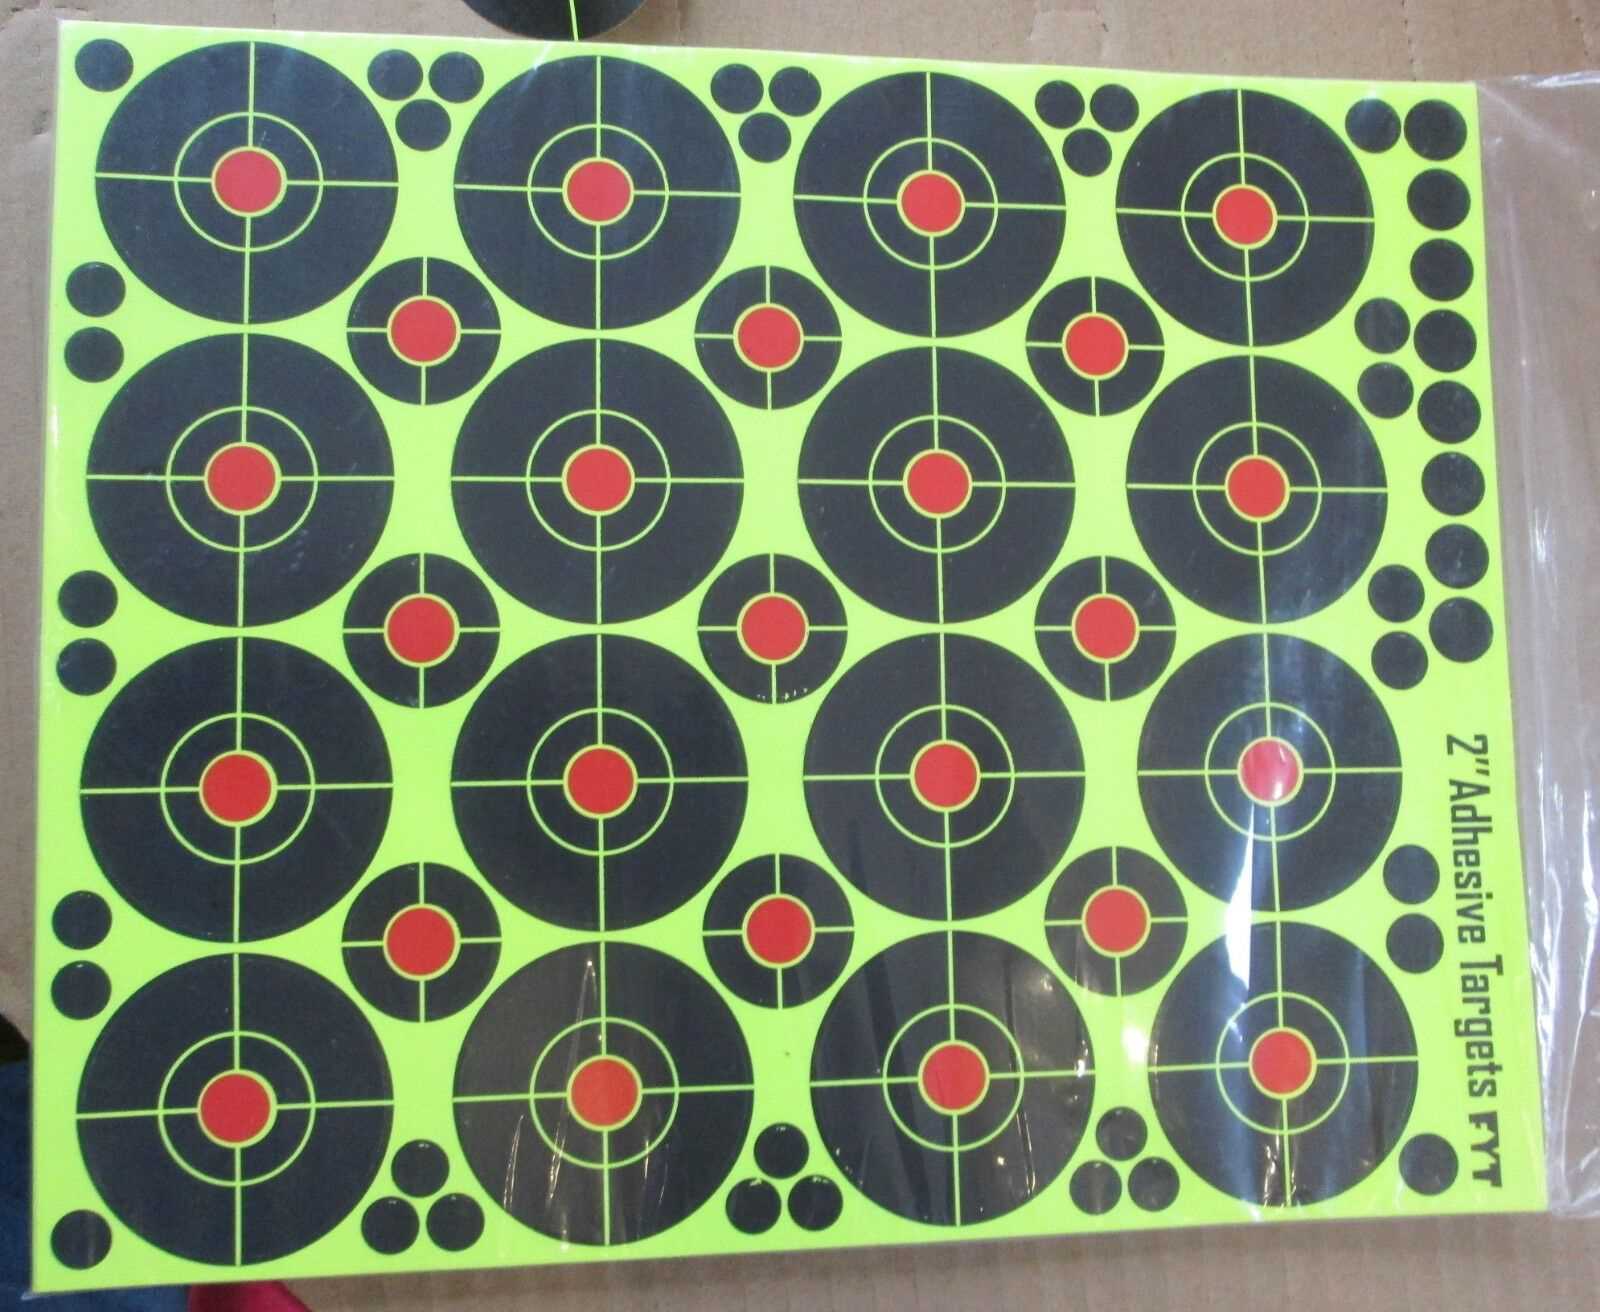 5 Sheets 80 Splatter Target 2" & 1" Shoot rifle pistol reactive air cheap targets N C 1+2